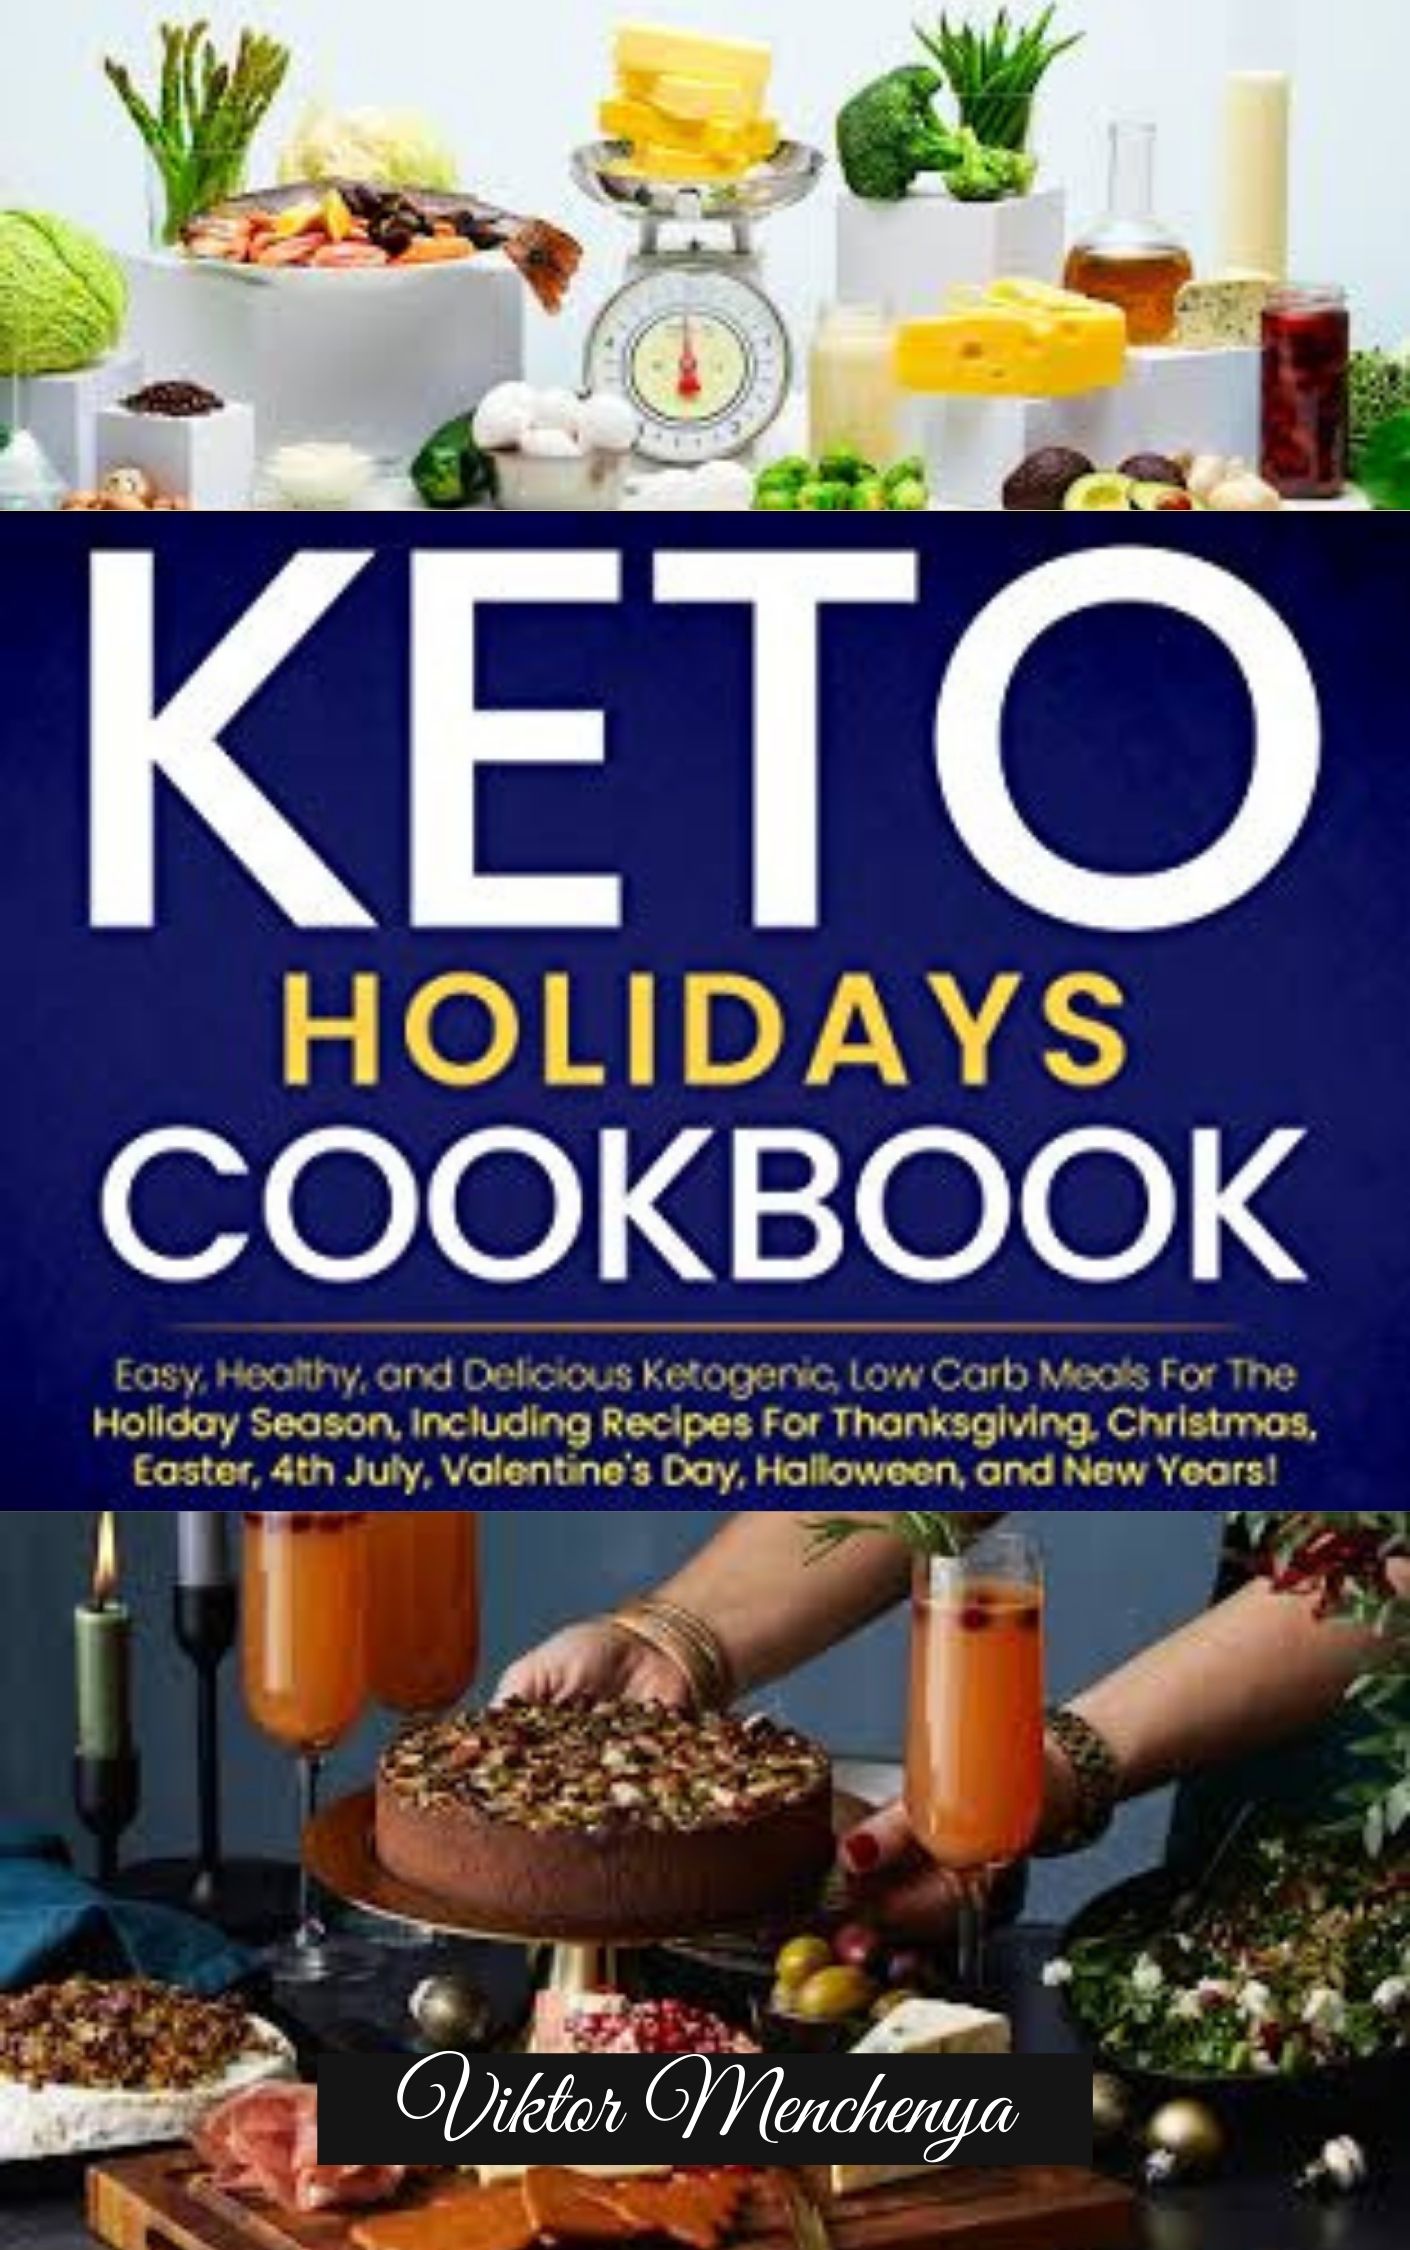 FREE: Keto Holidays Cookbook by Viktor Menchenia